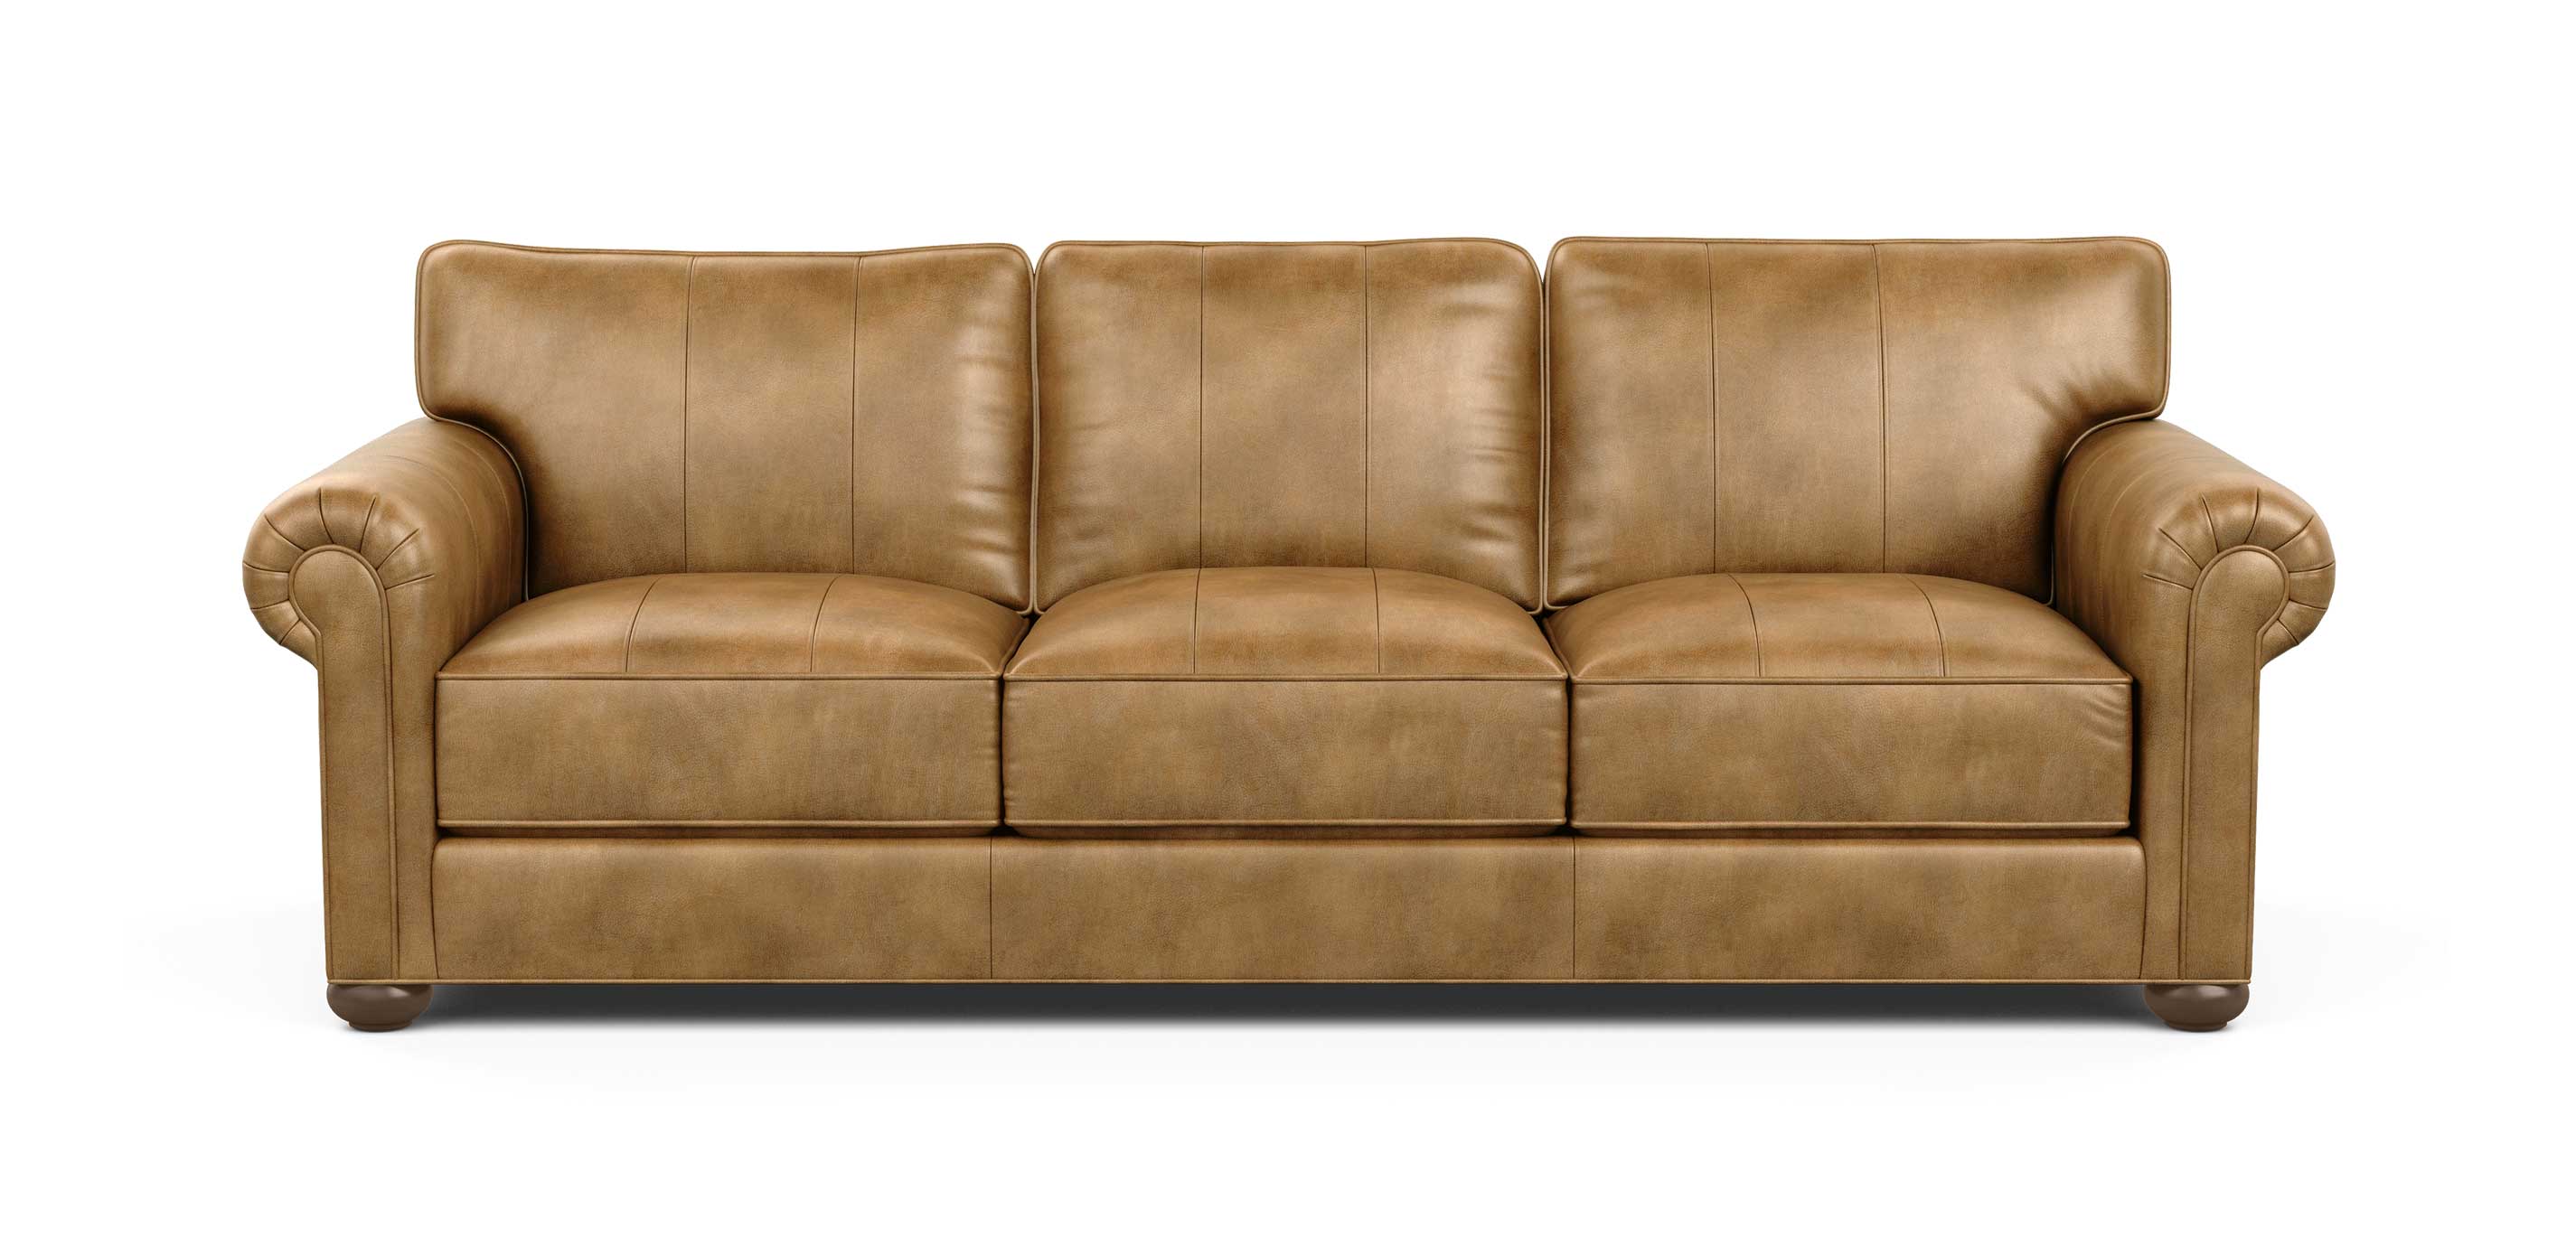 ethan allen richmond leather sofa